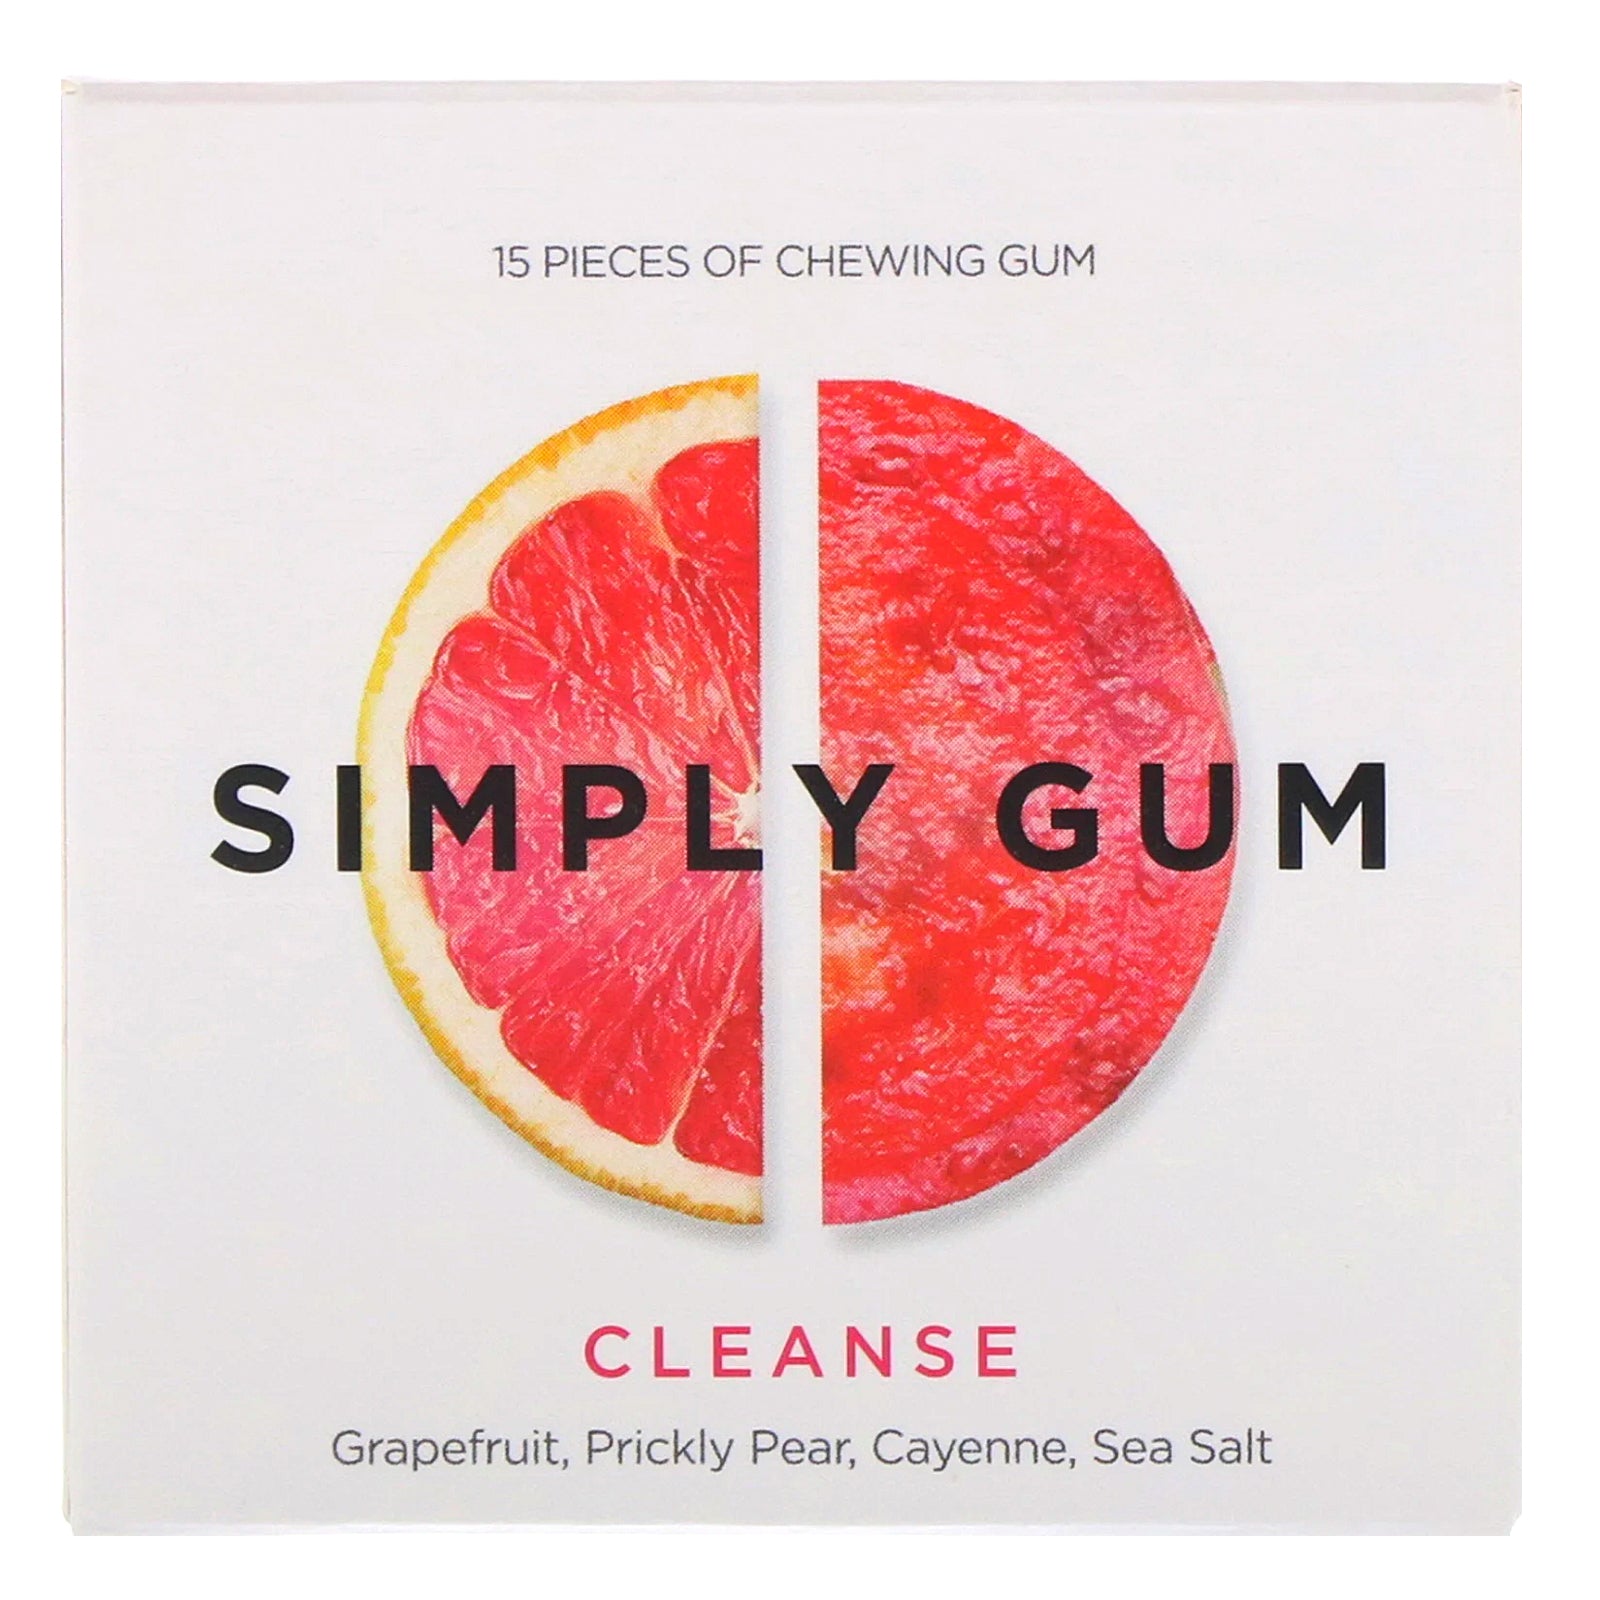 Simply Gum, Cleanse Gum, 15 Pieces